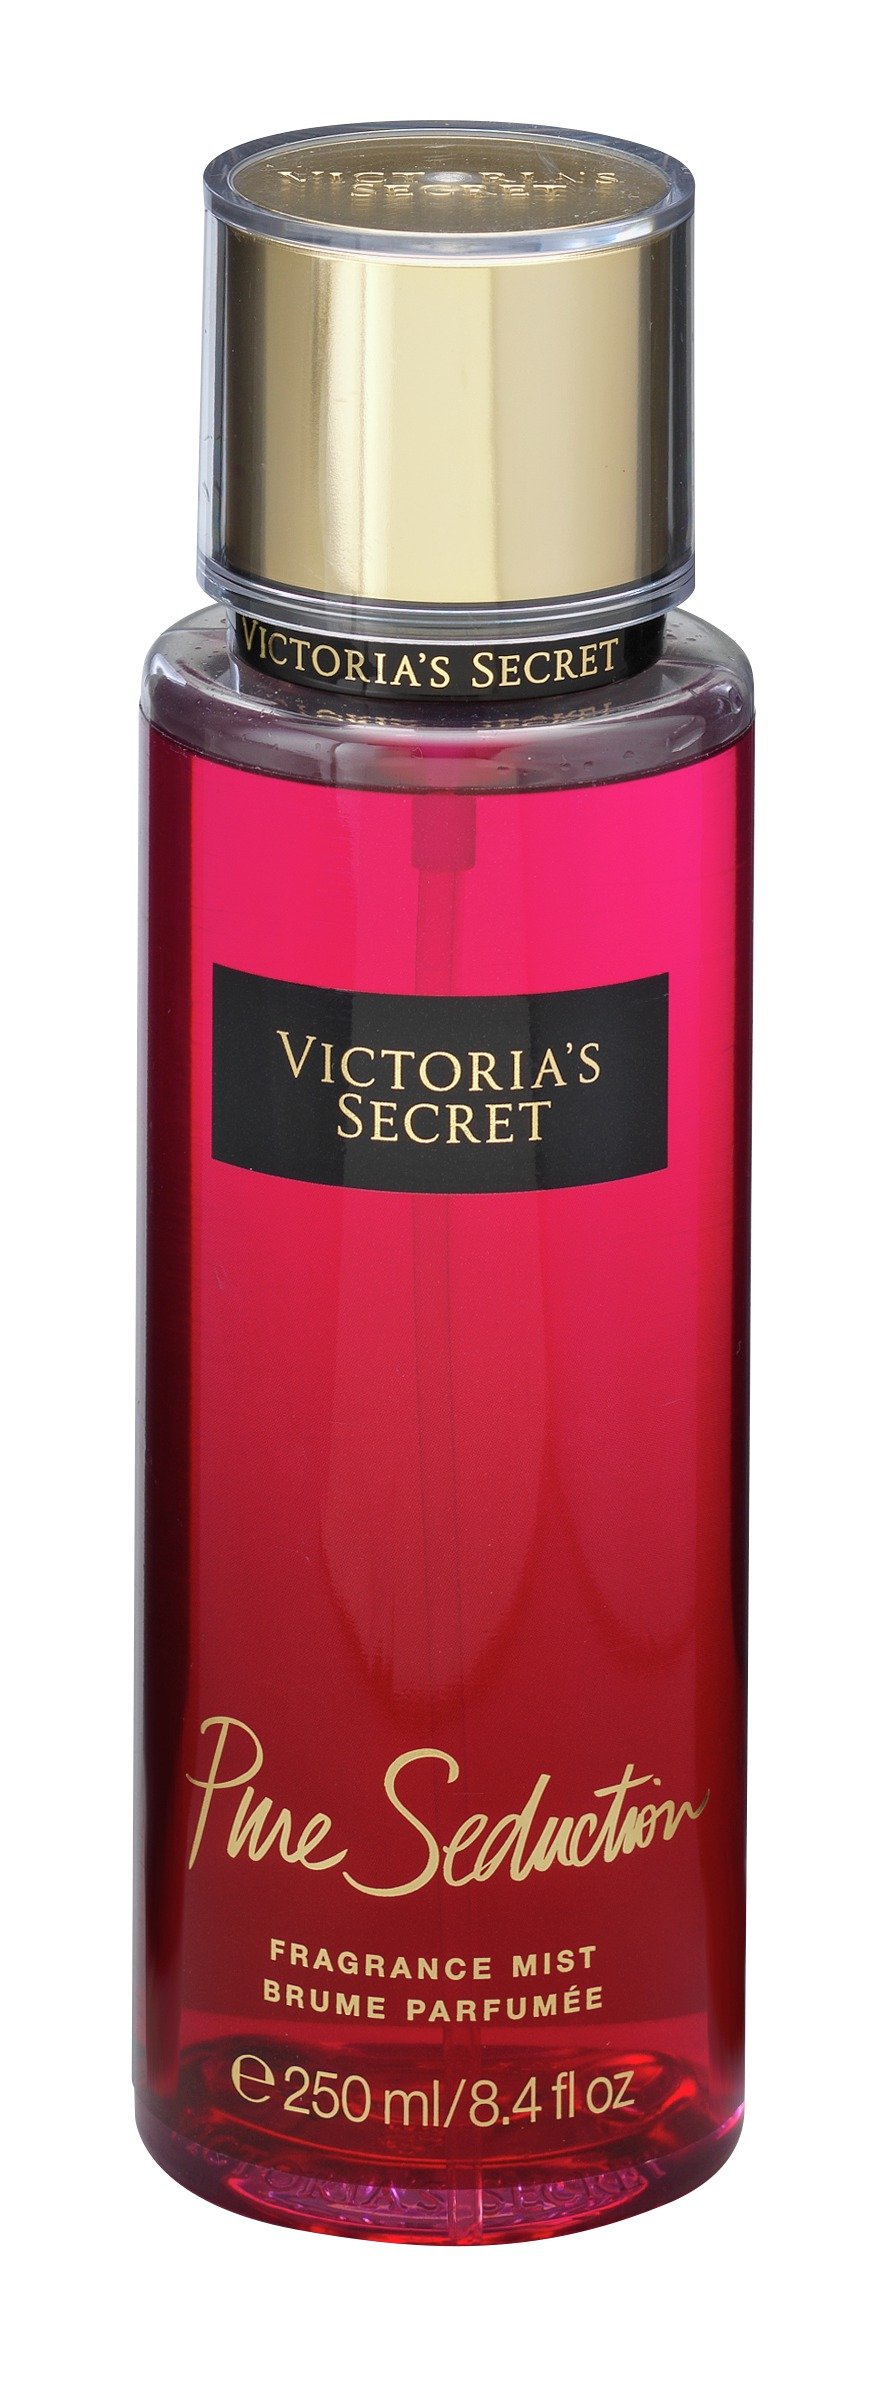 Victorias Secret Pure Seduction Body Mist 250ml 7287156 Argos